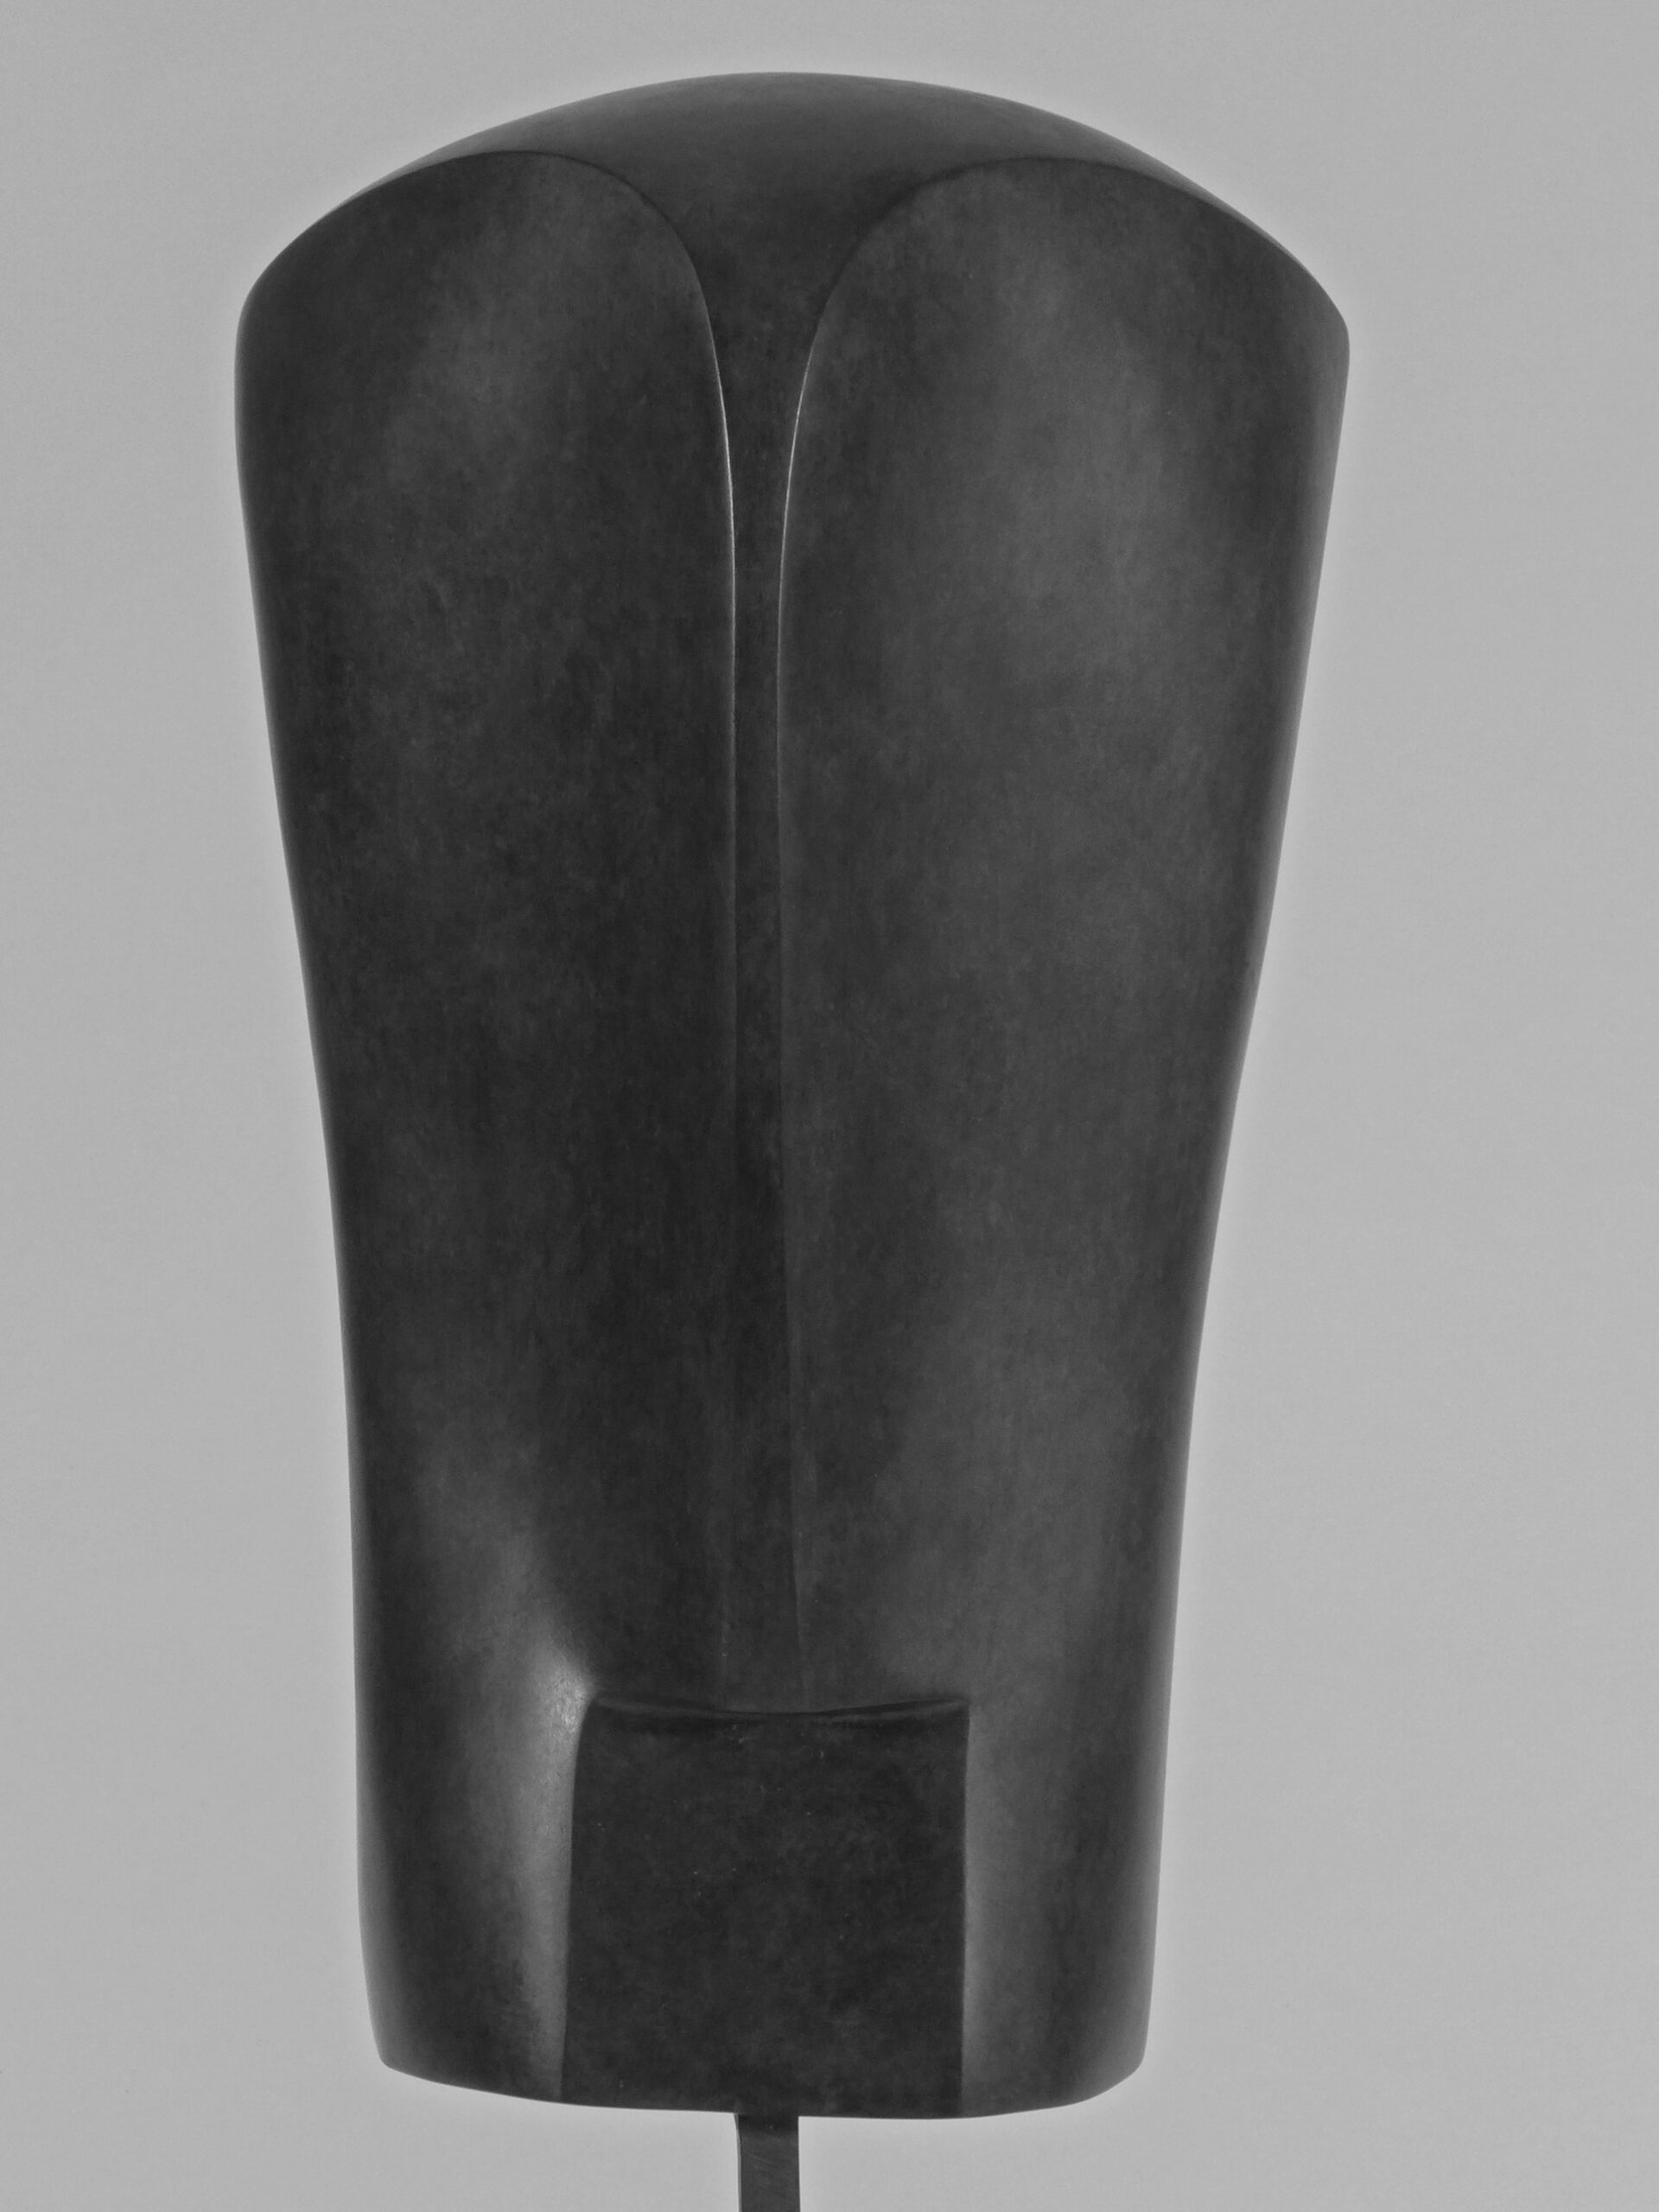 14 L’Envie, 1986, bronze, h 63 cm